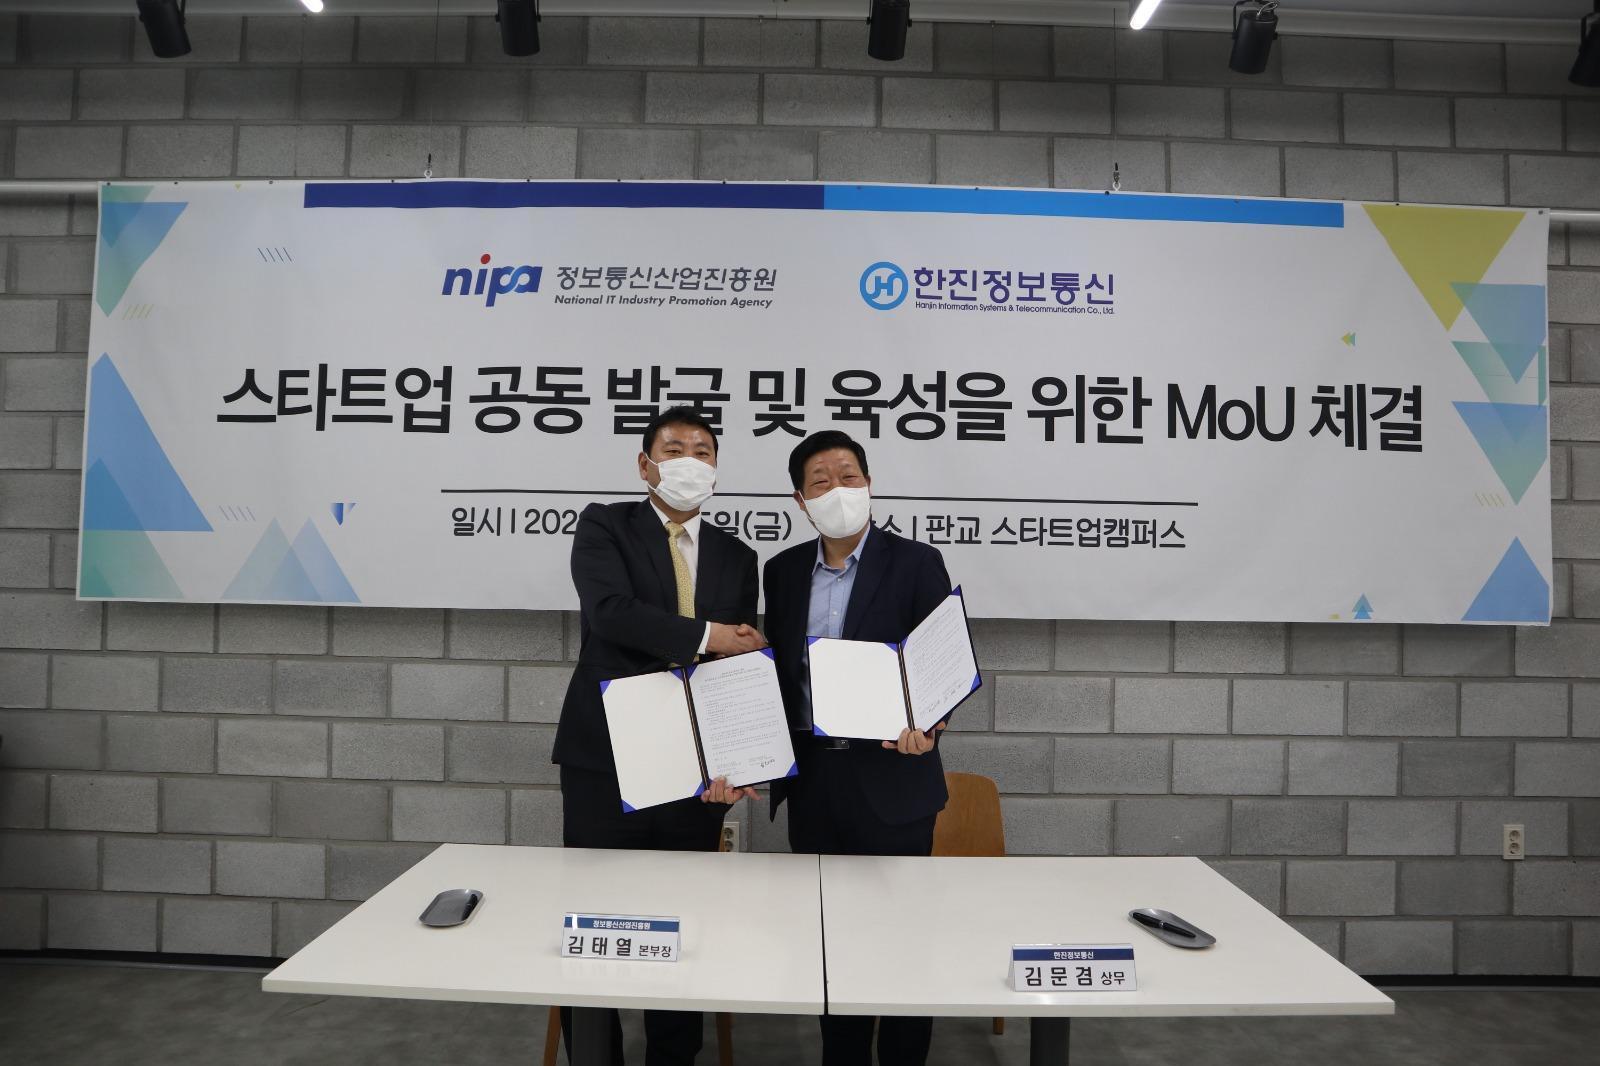 NIPA & Hanjin Information Systems & Telecommunication Co., Ltd sign a memorandum of understanding (MOU) to promote foreign startups.